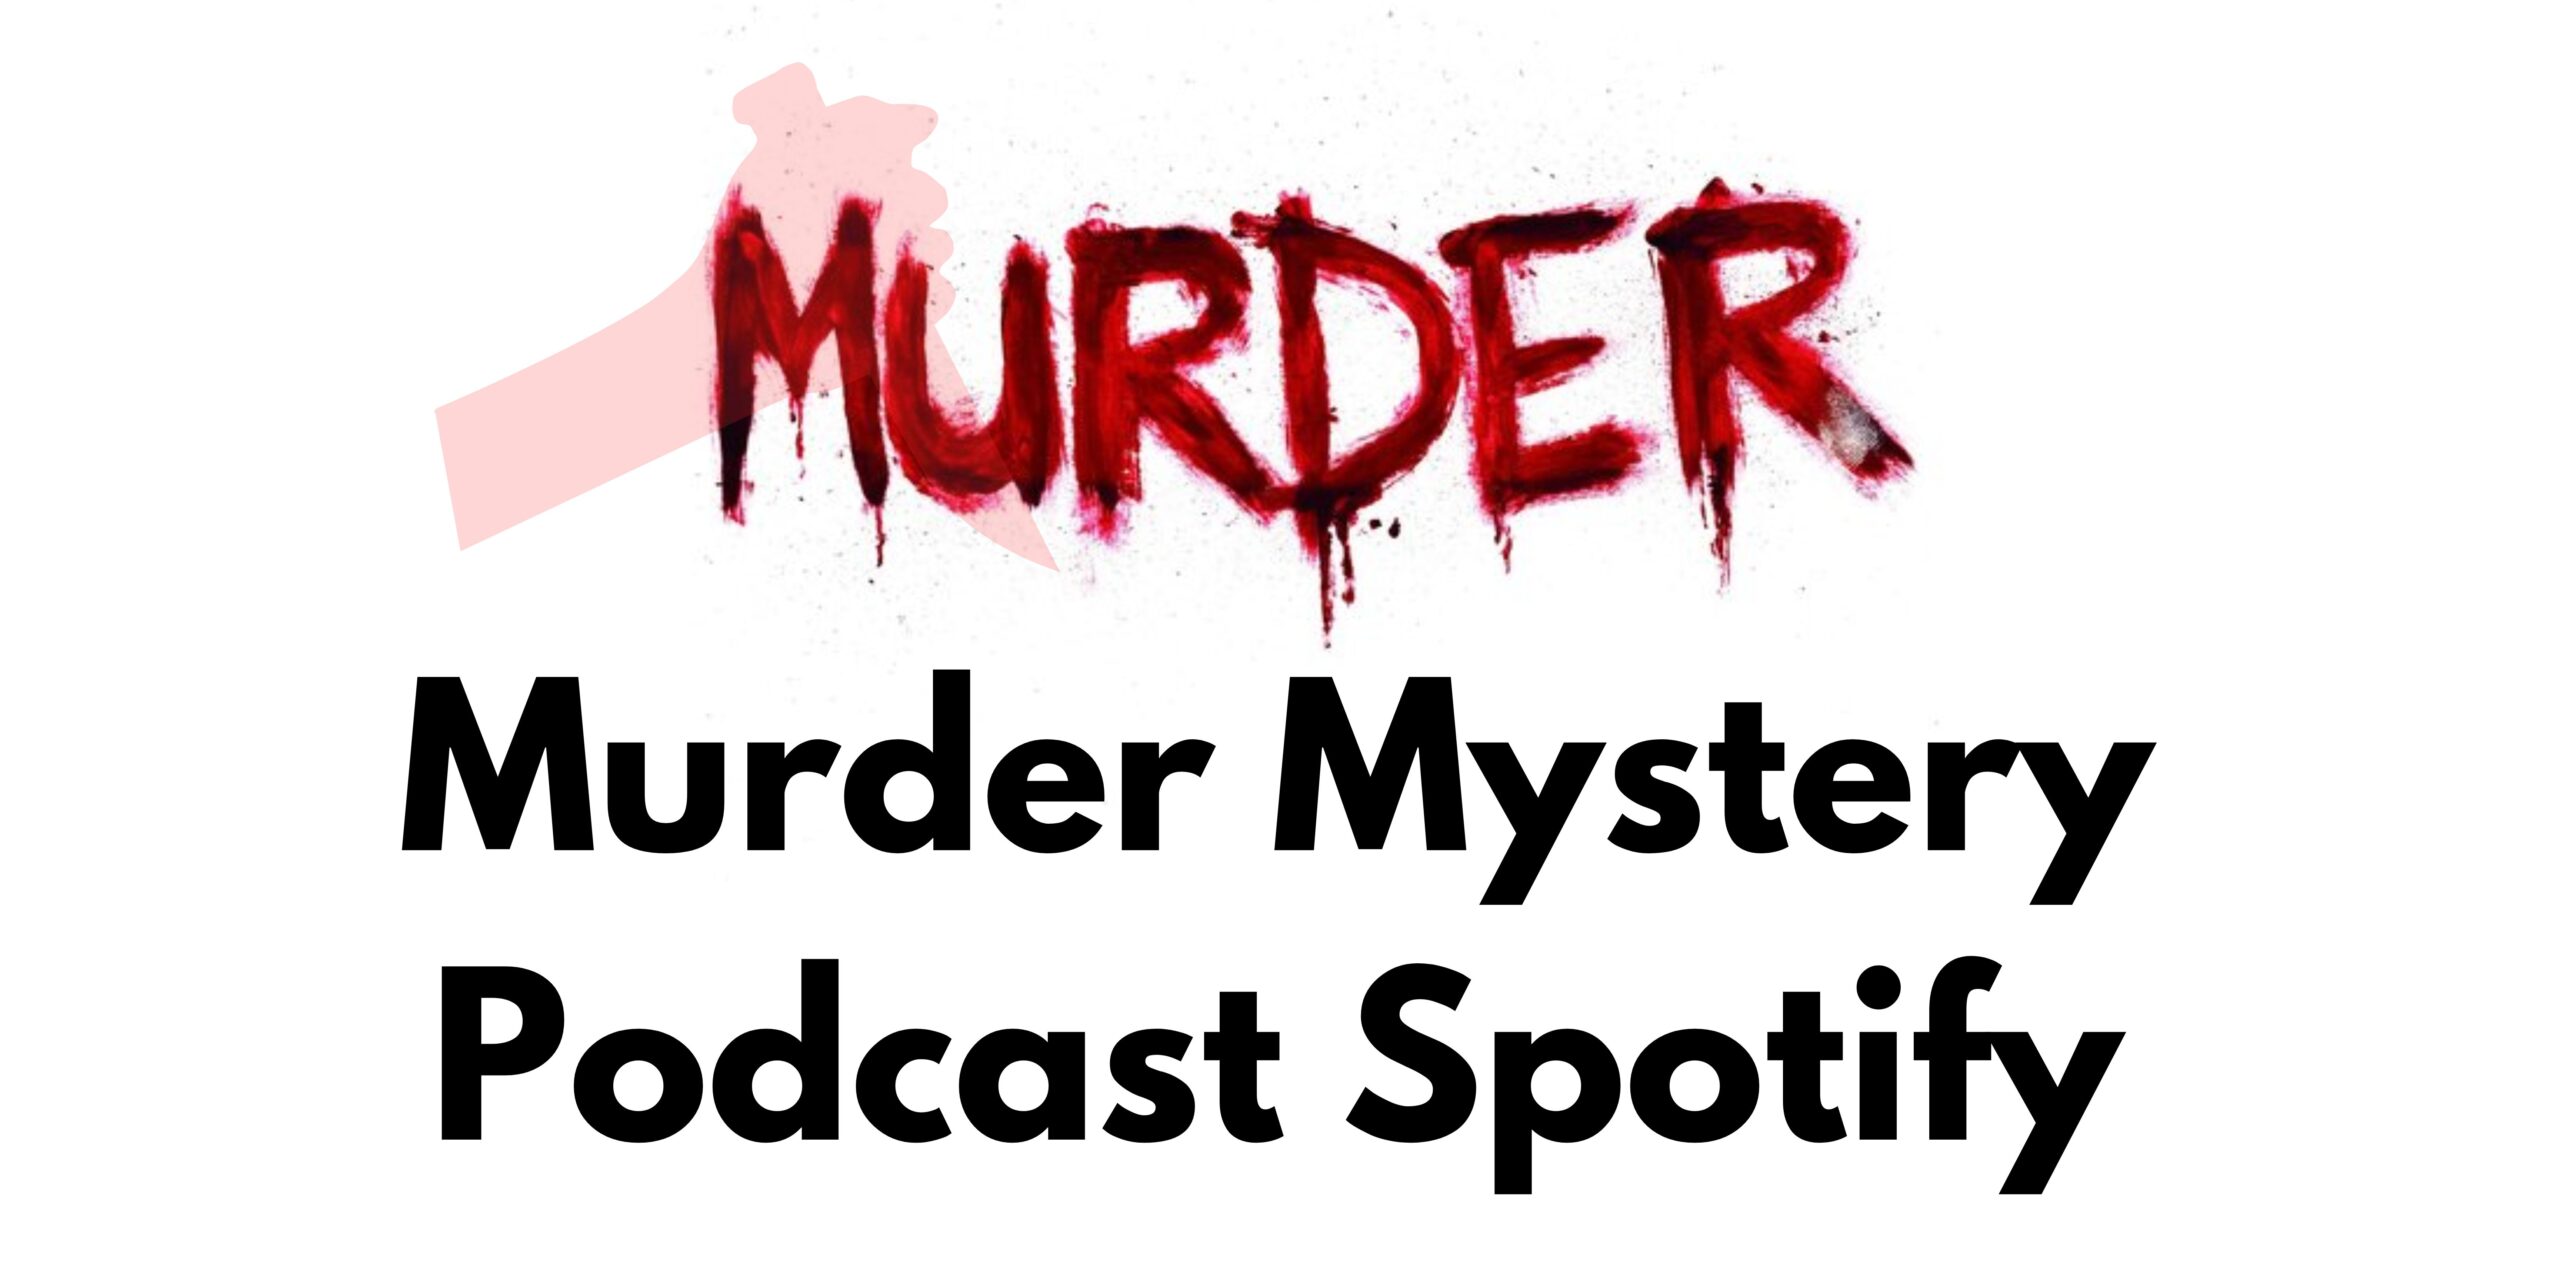 Murder Mystery Podcast Spotify